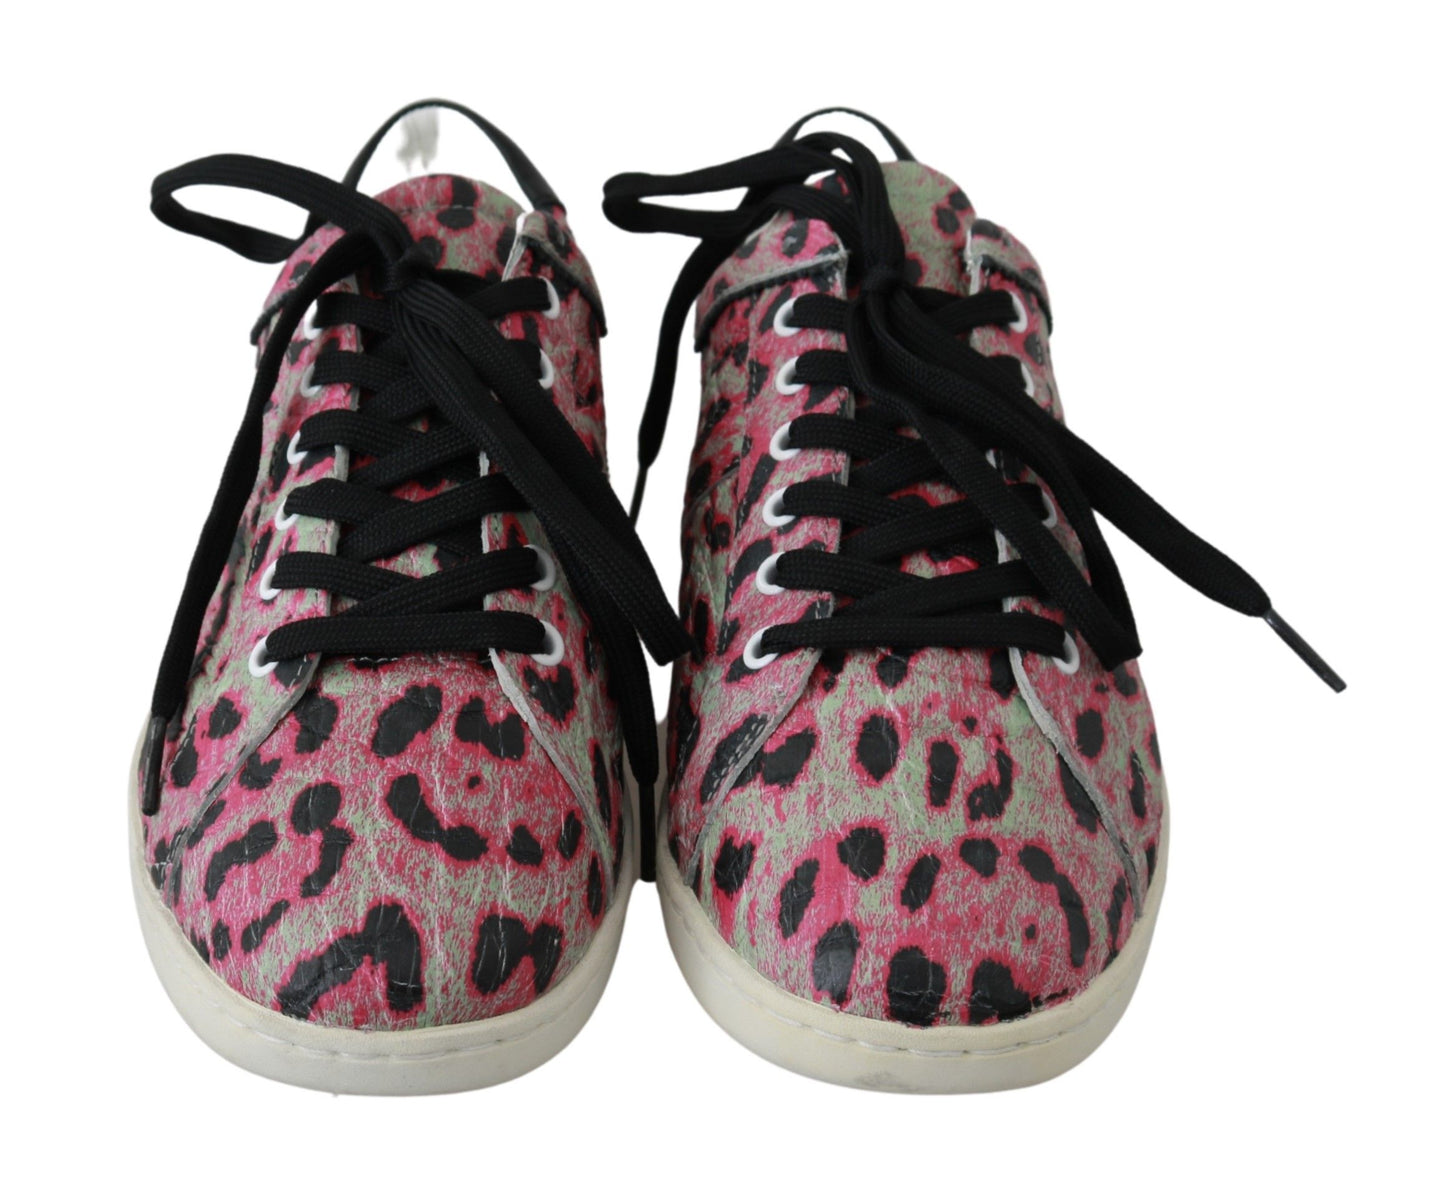 Dolce & Gabbana Pink Leopard Print Allenamento in pelle Sneaker piatti